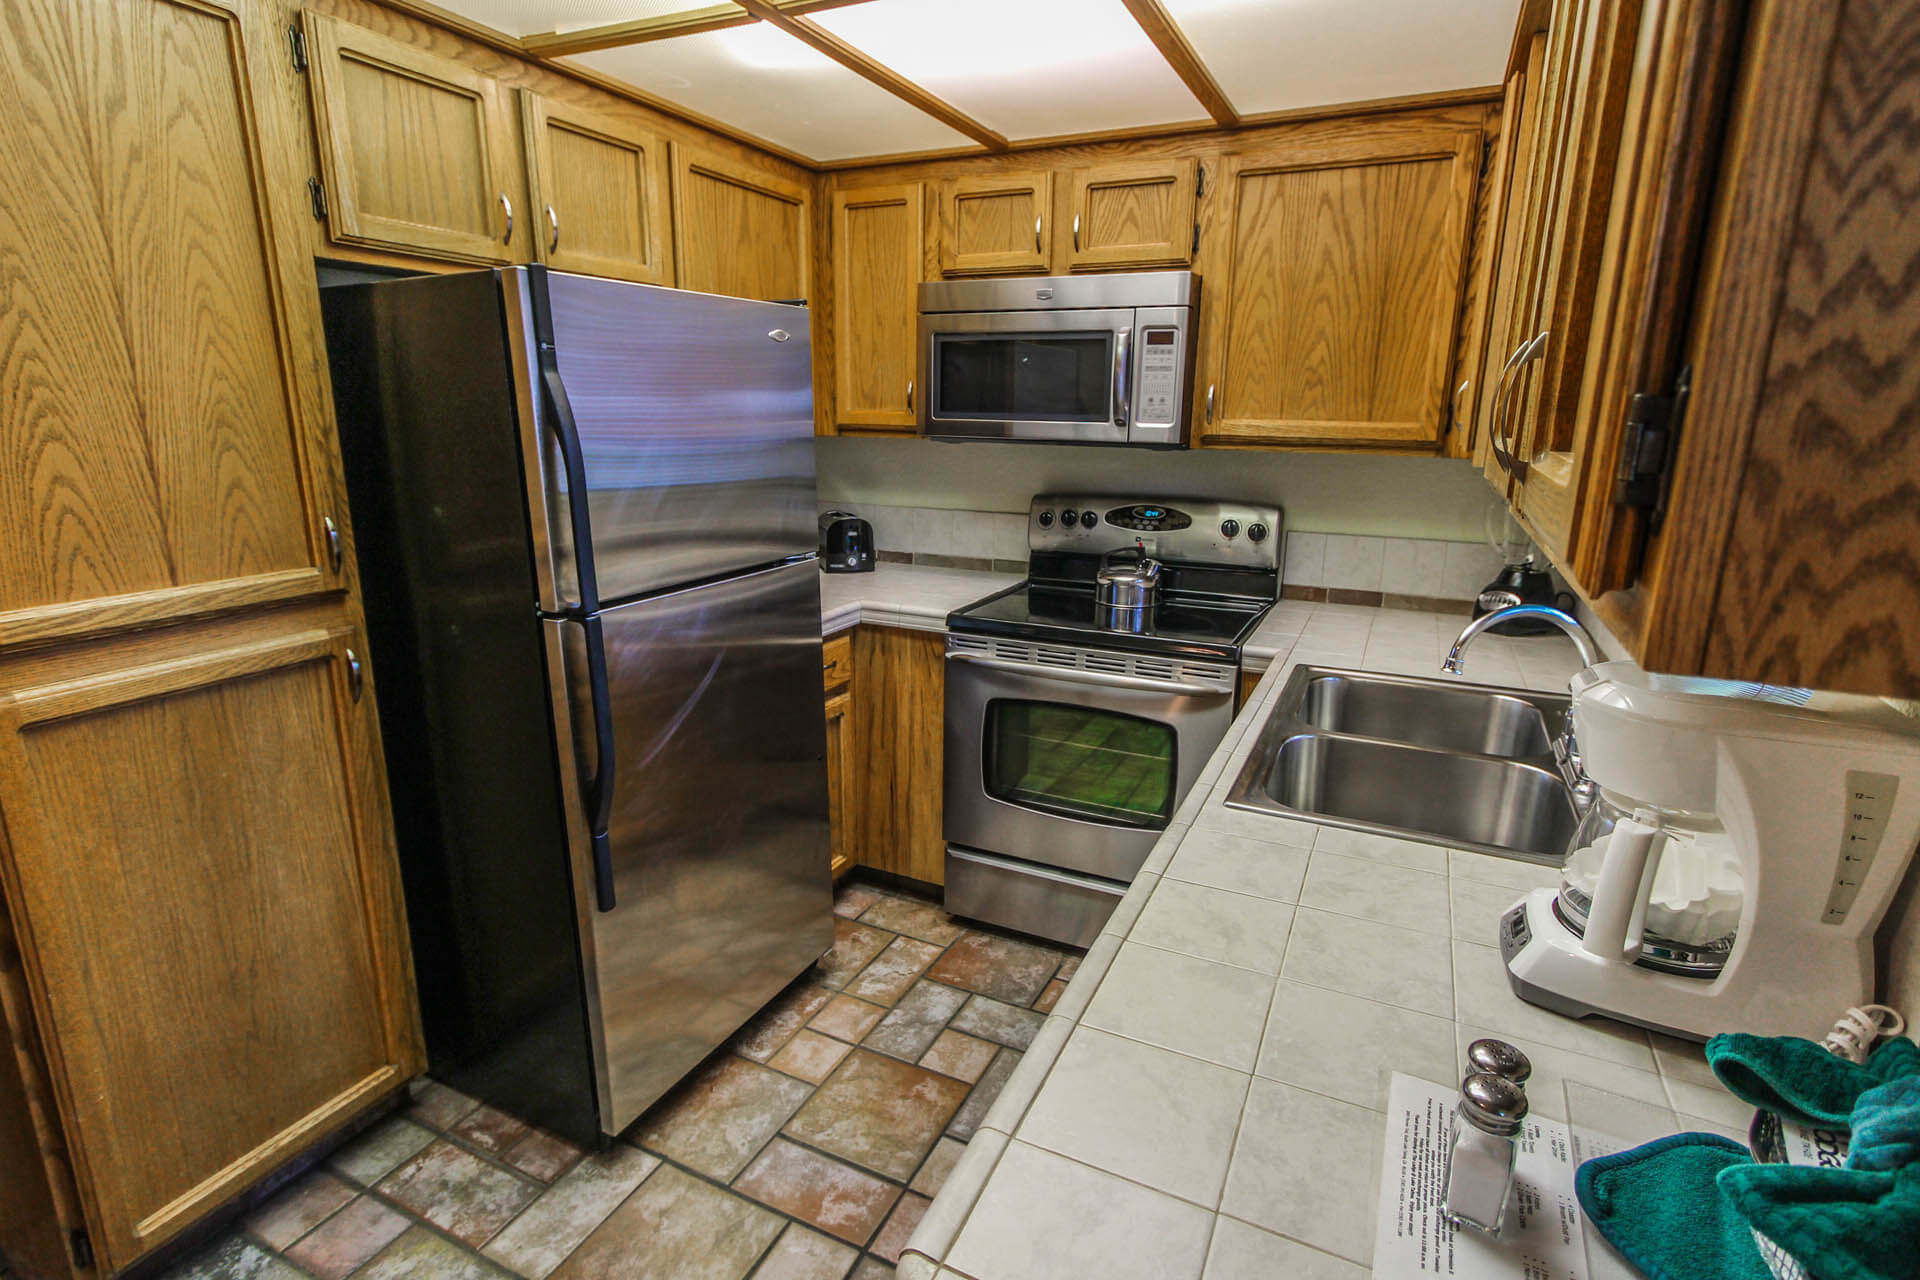 A spacious kitchen at VRI's The Lodge at Lake Tahoe in California.